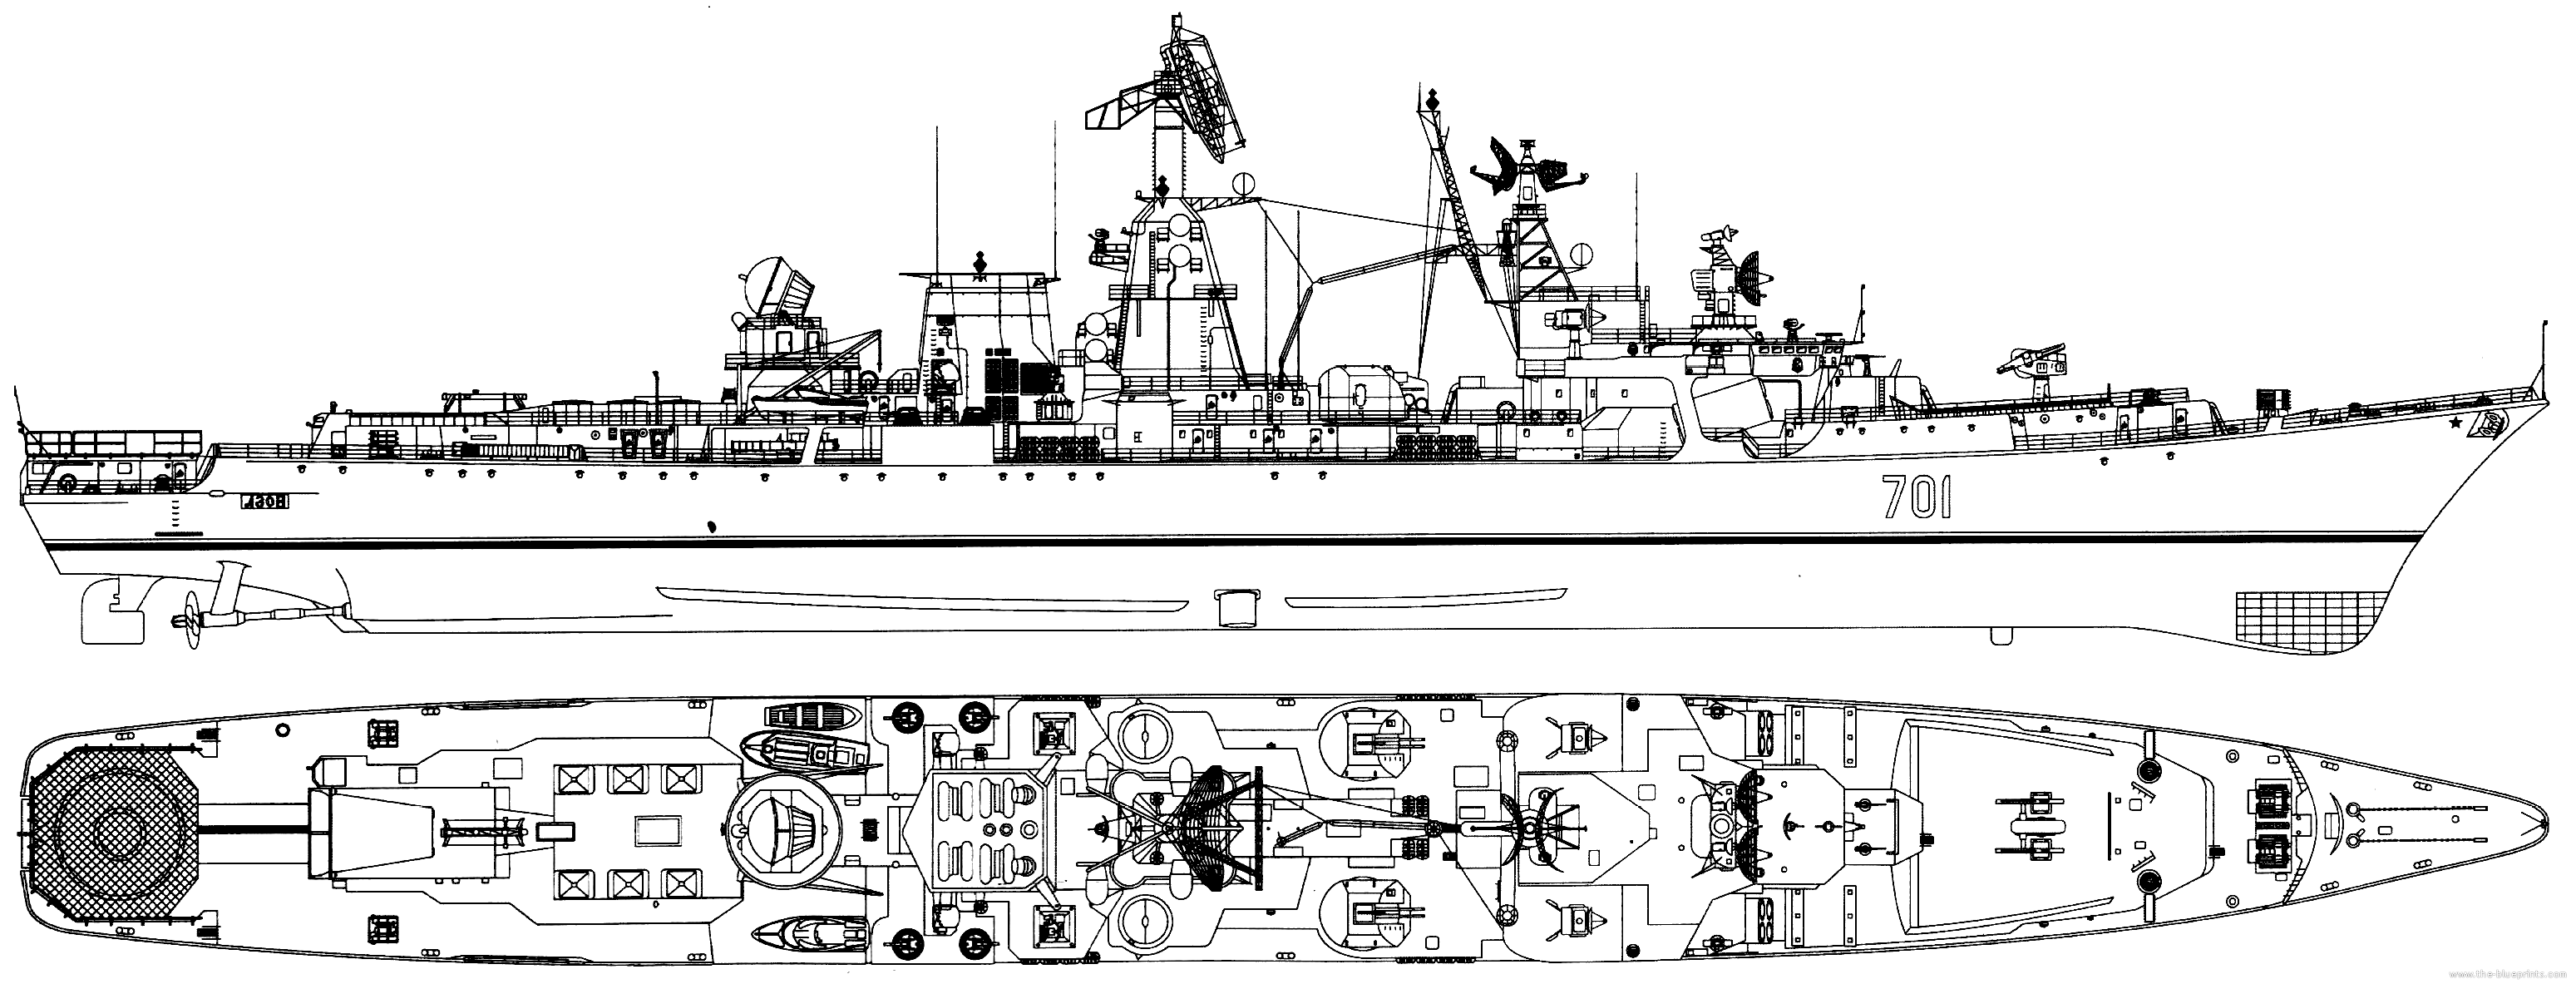 1706454213 728 Kara class cruisers